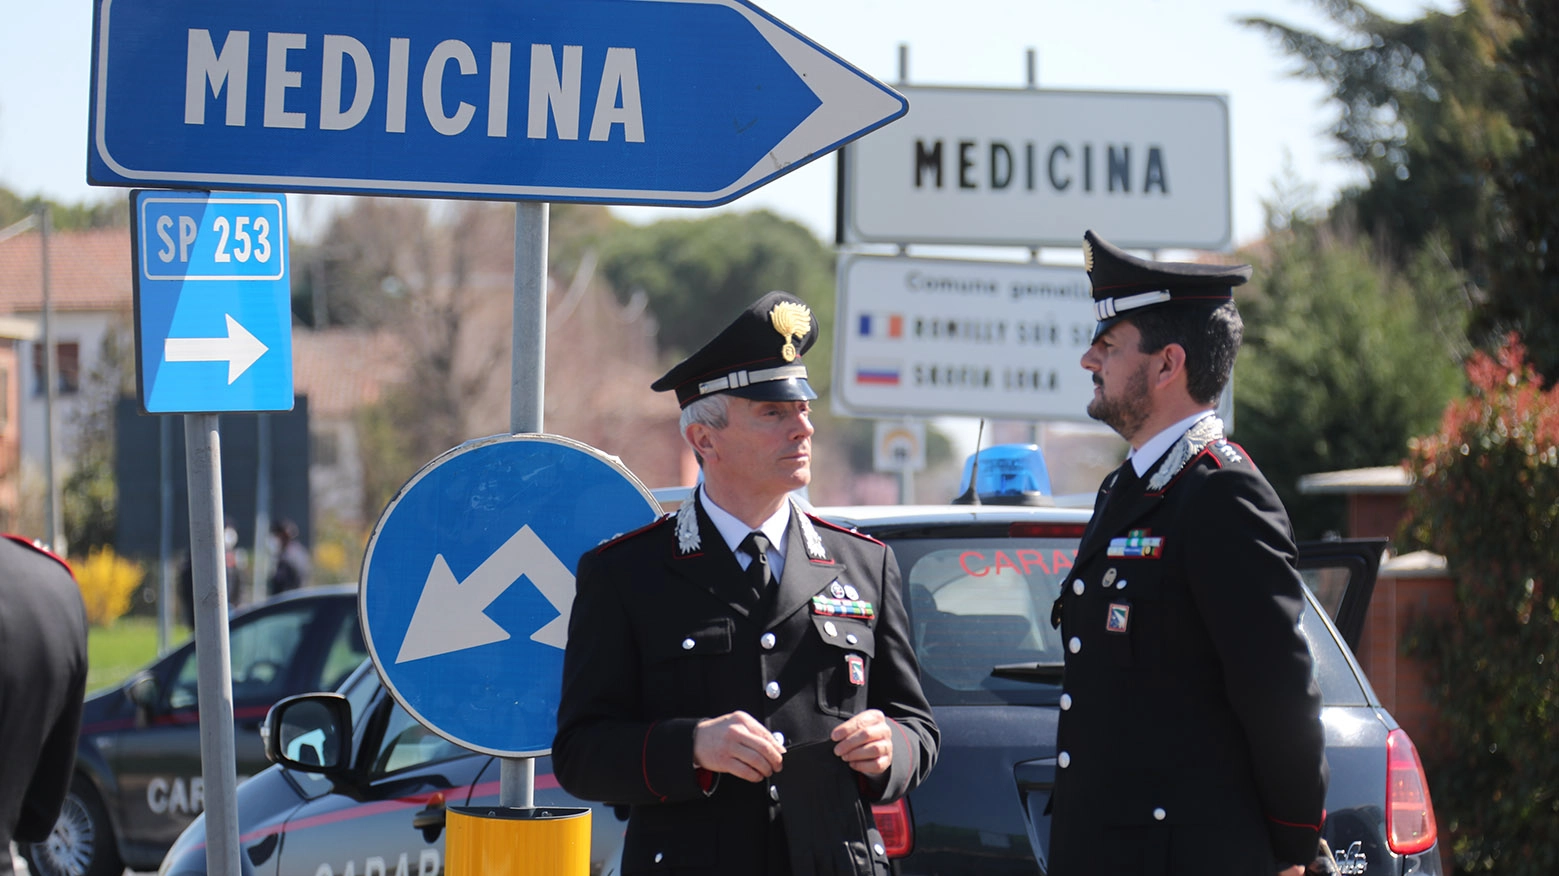 I carabinieri presidiano gli ingressi a Medicina (Isolapress)